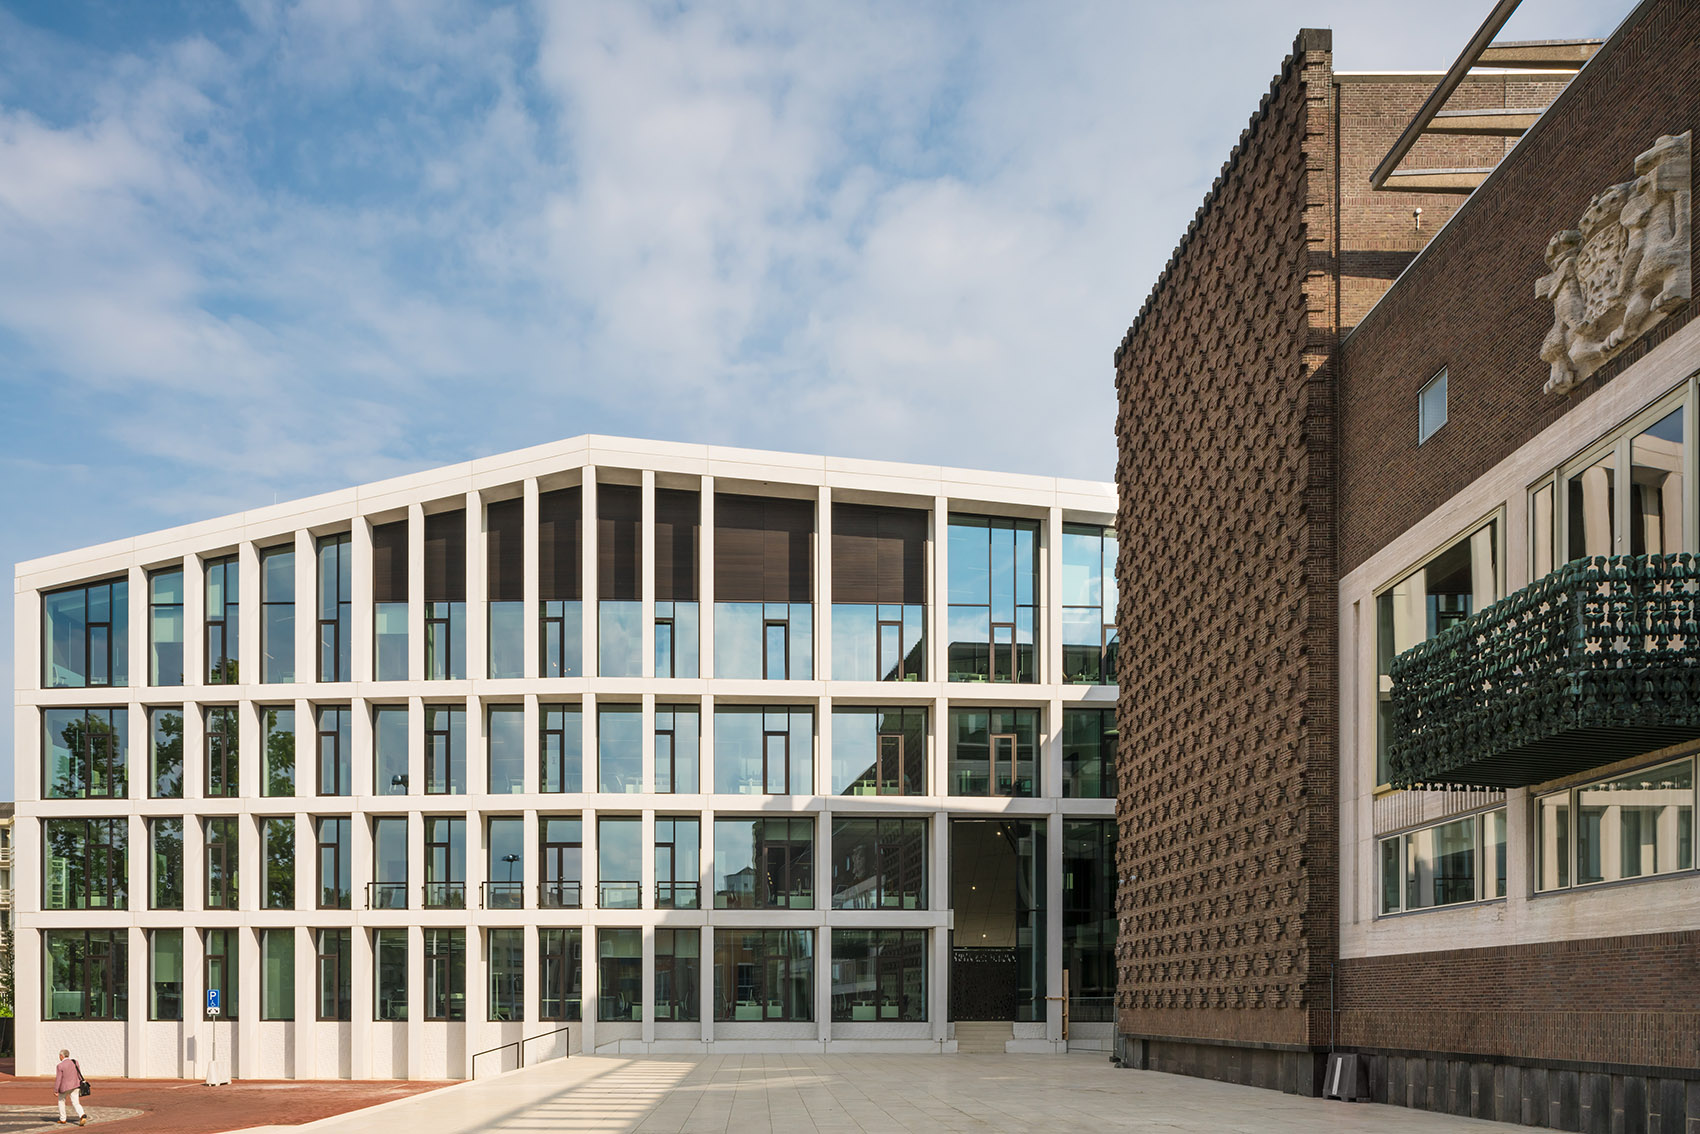 Gelderland省政厅，荷兰/新与旧，历史与创意、厚重与轻盈-10